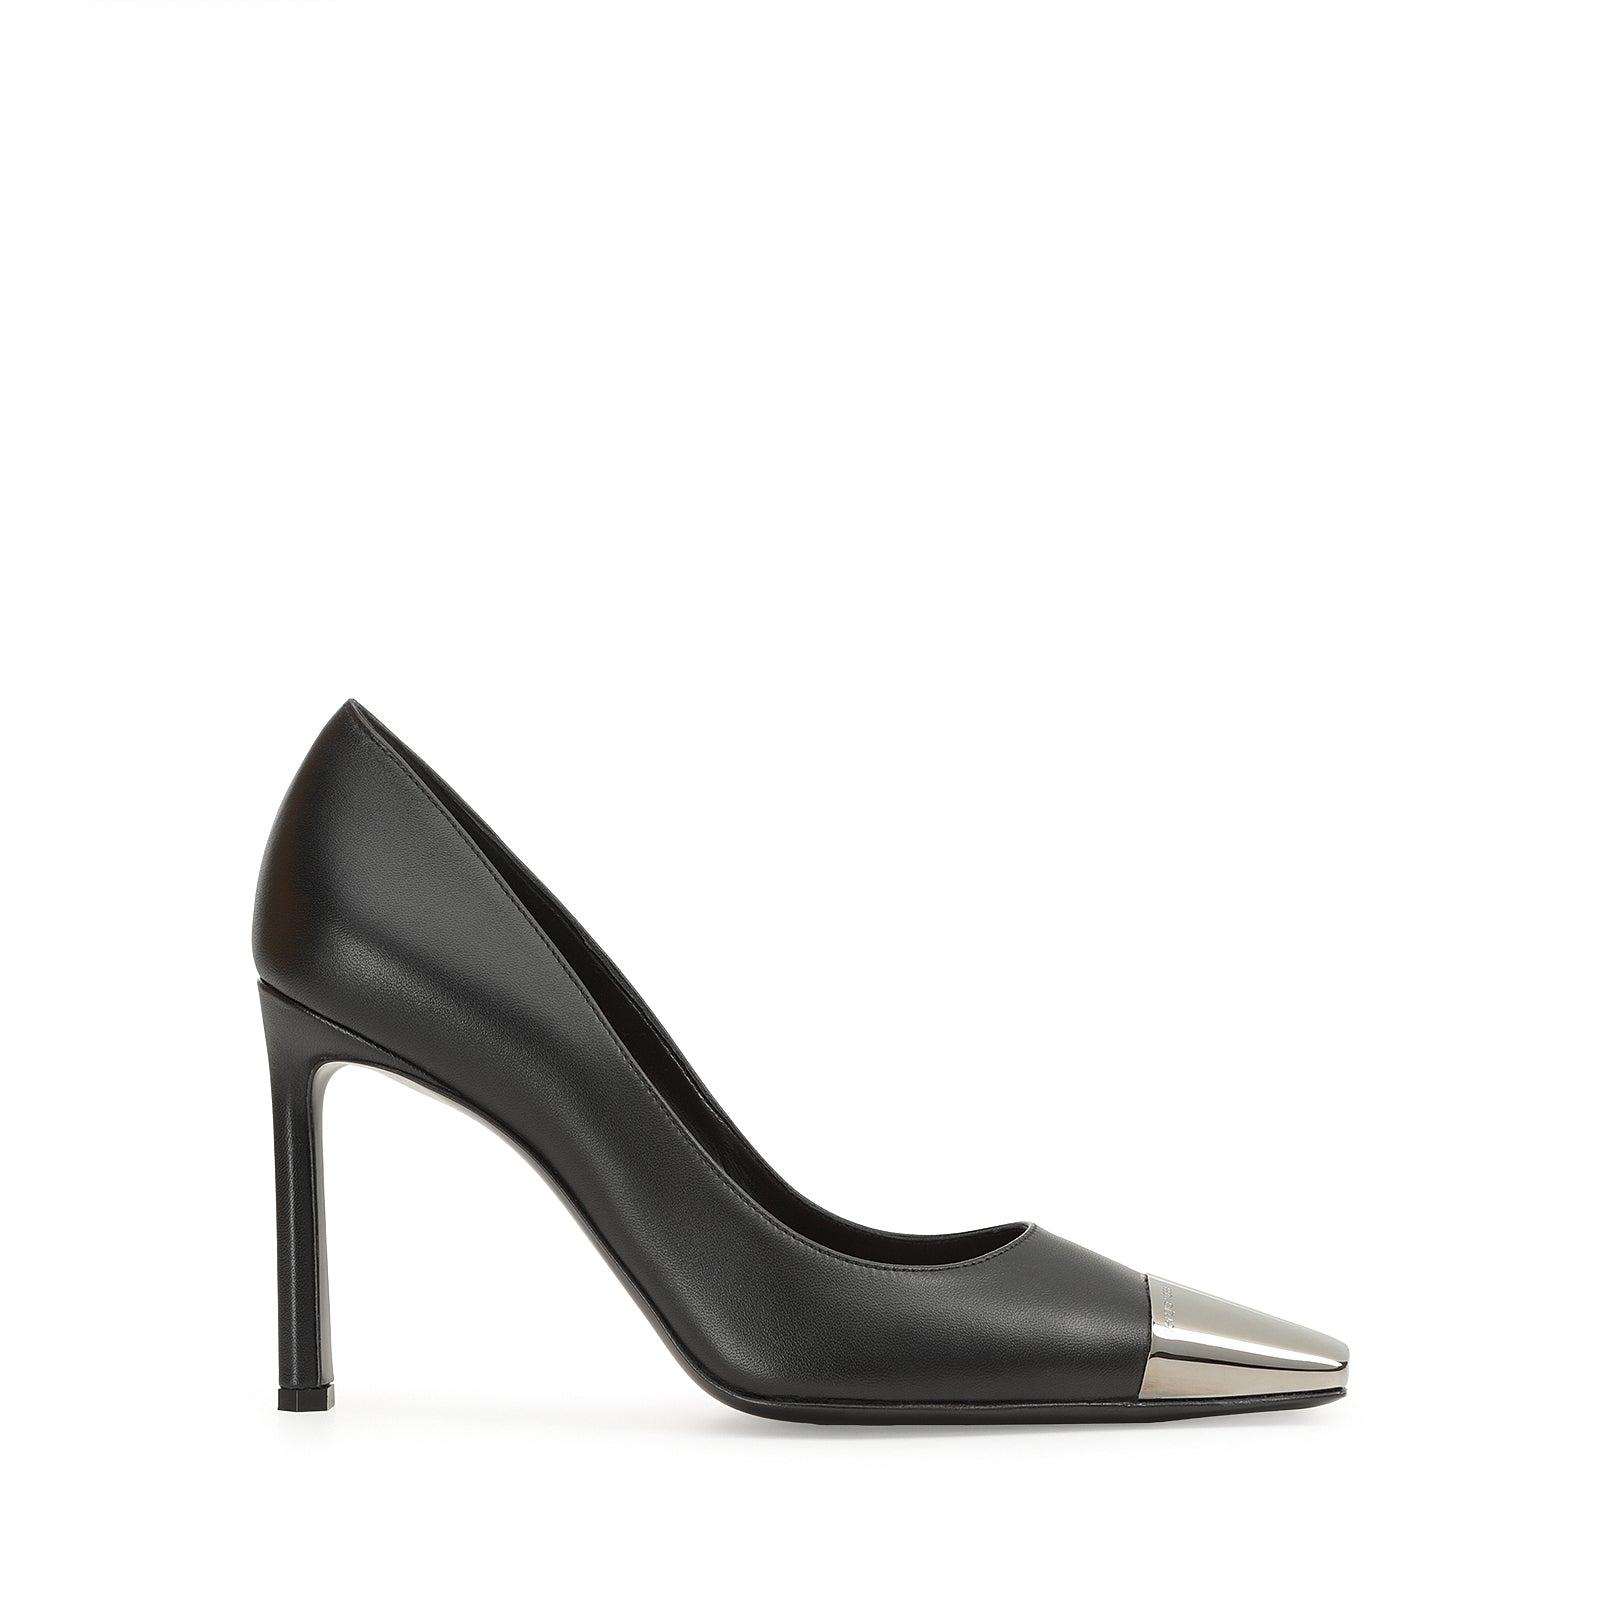 Louis Vuitton Limited Edition Woman Shoes Size 39.5, US 9.5